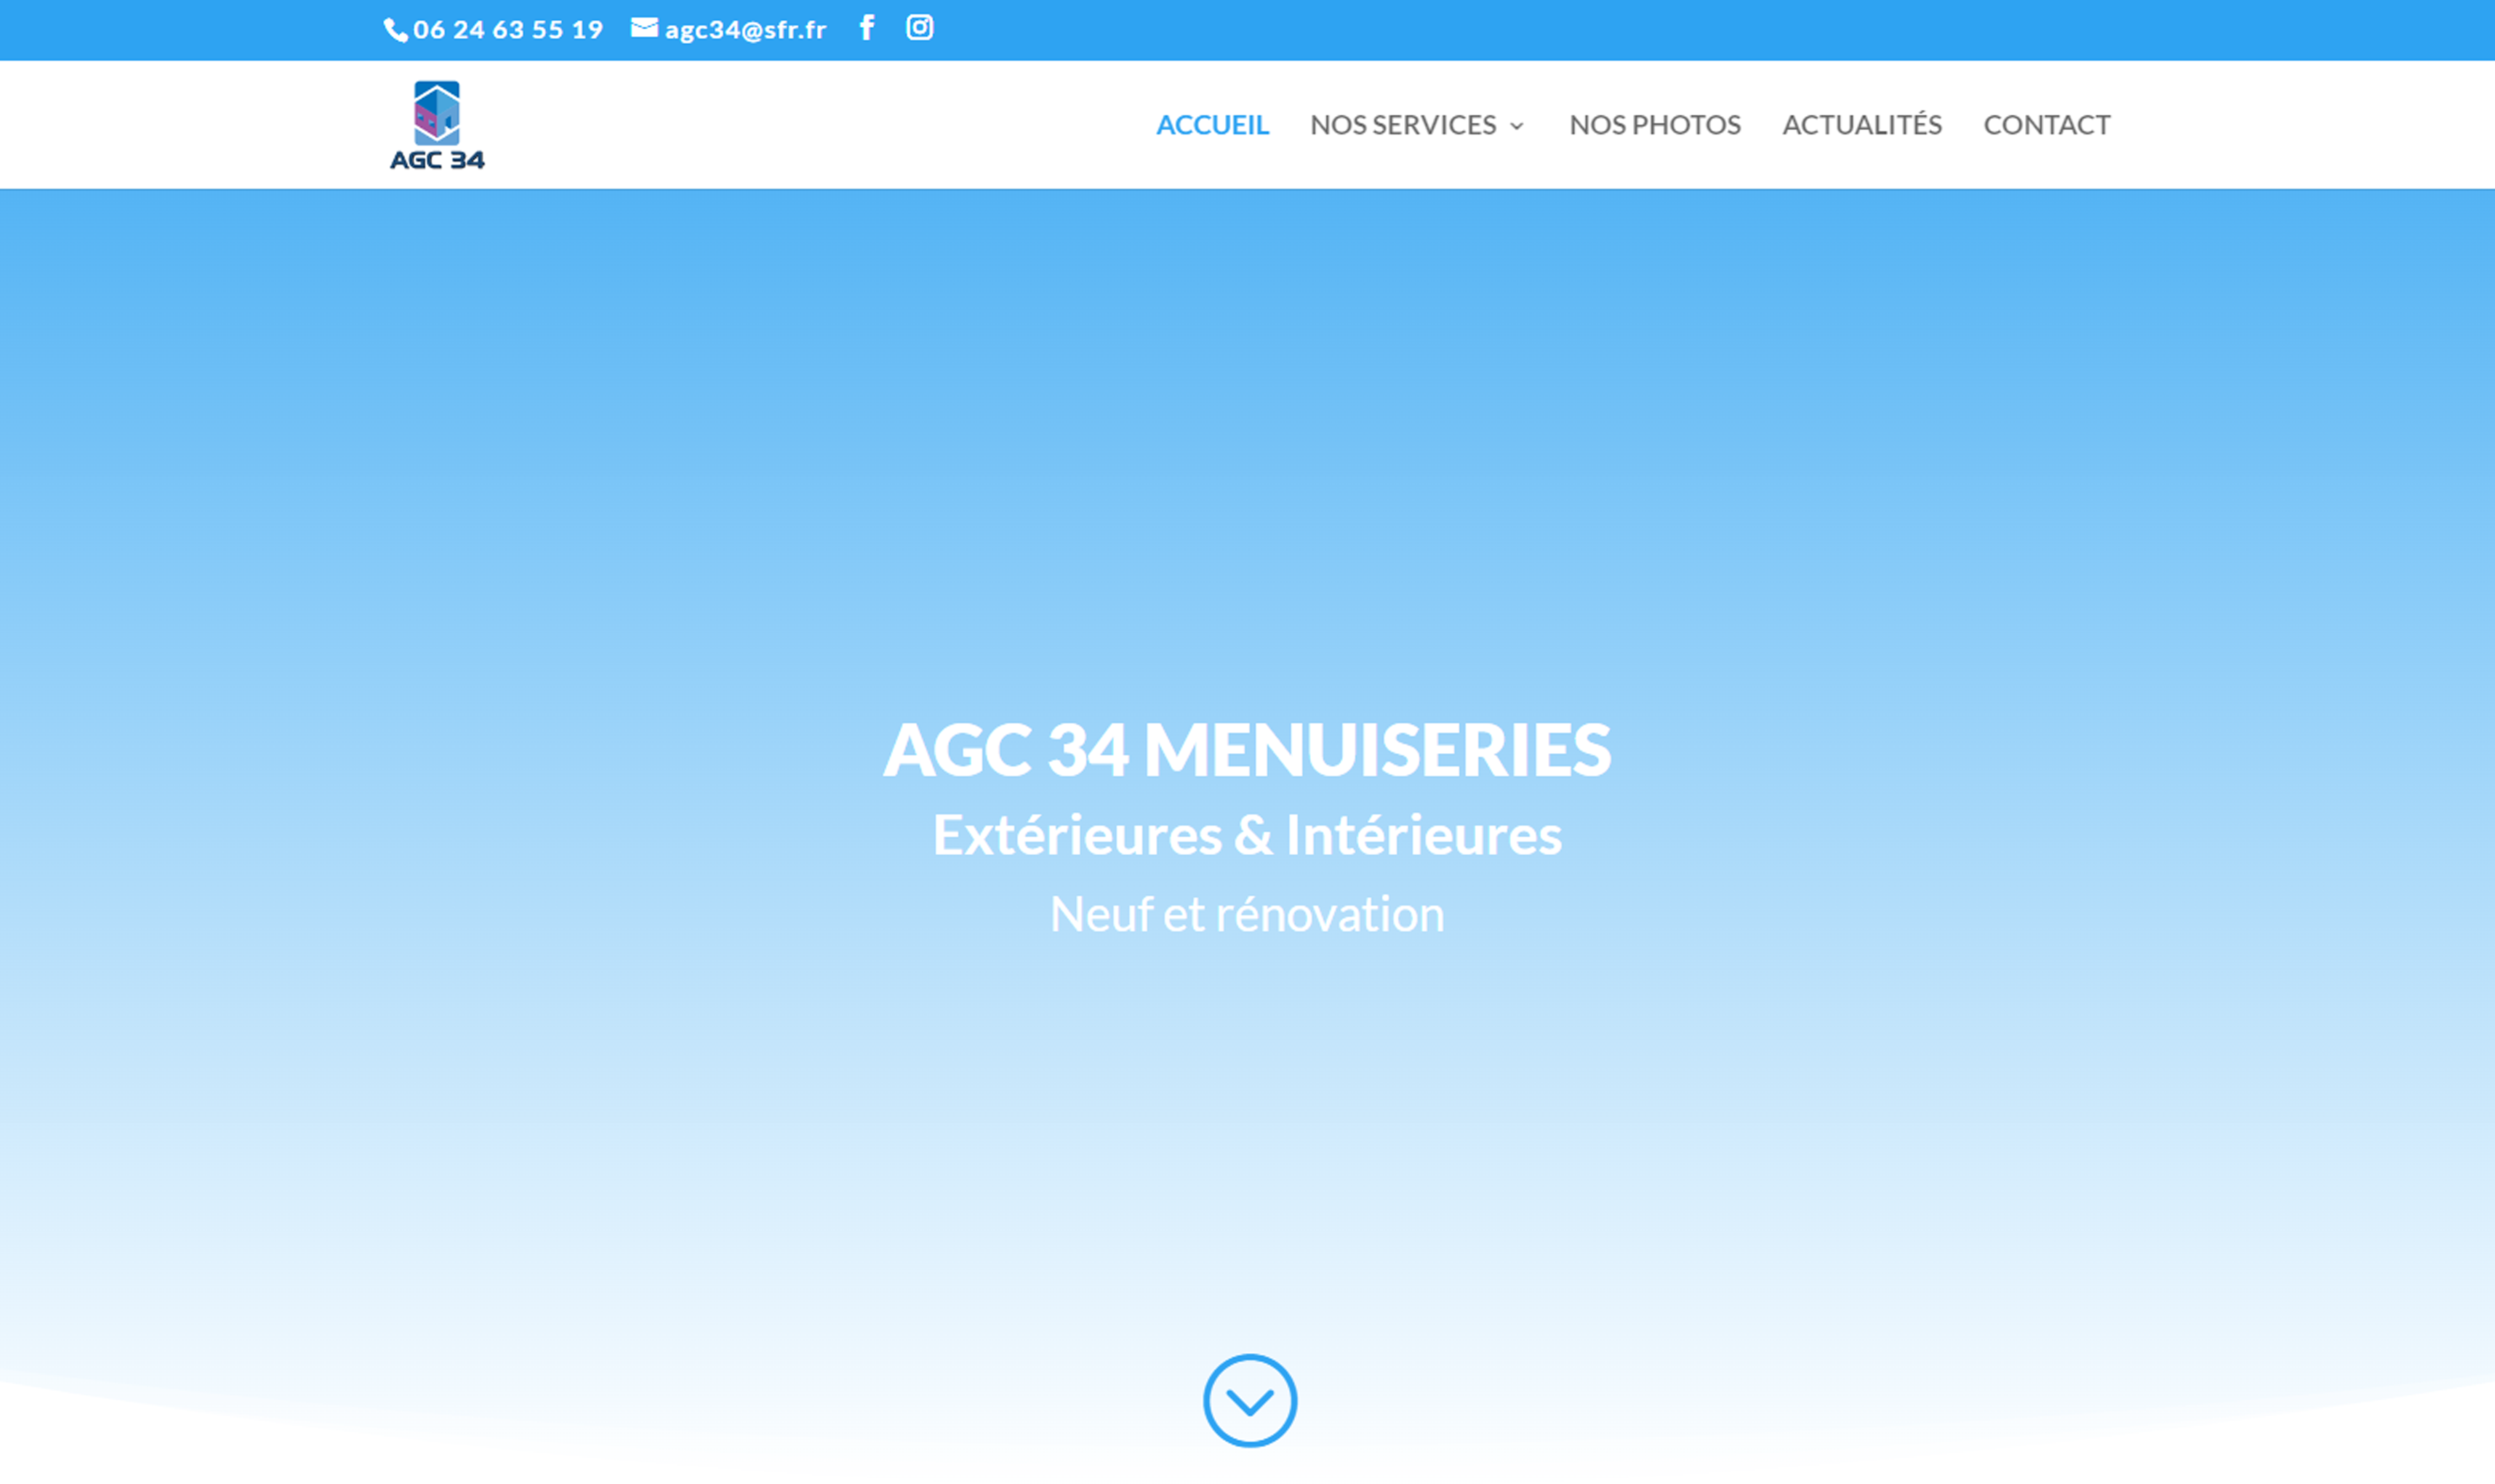 Pierre HERAUD - Projet AGC34 Menuiseries